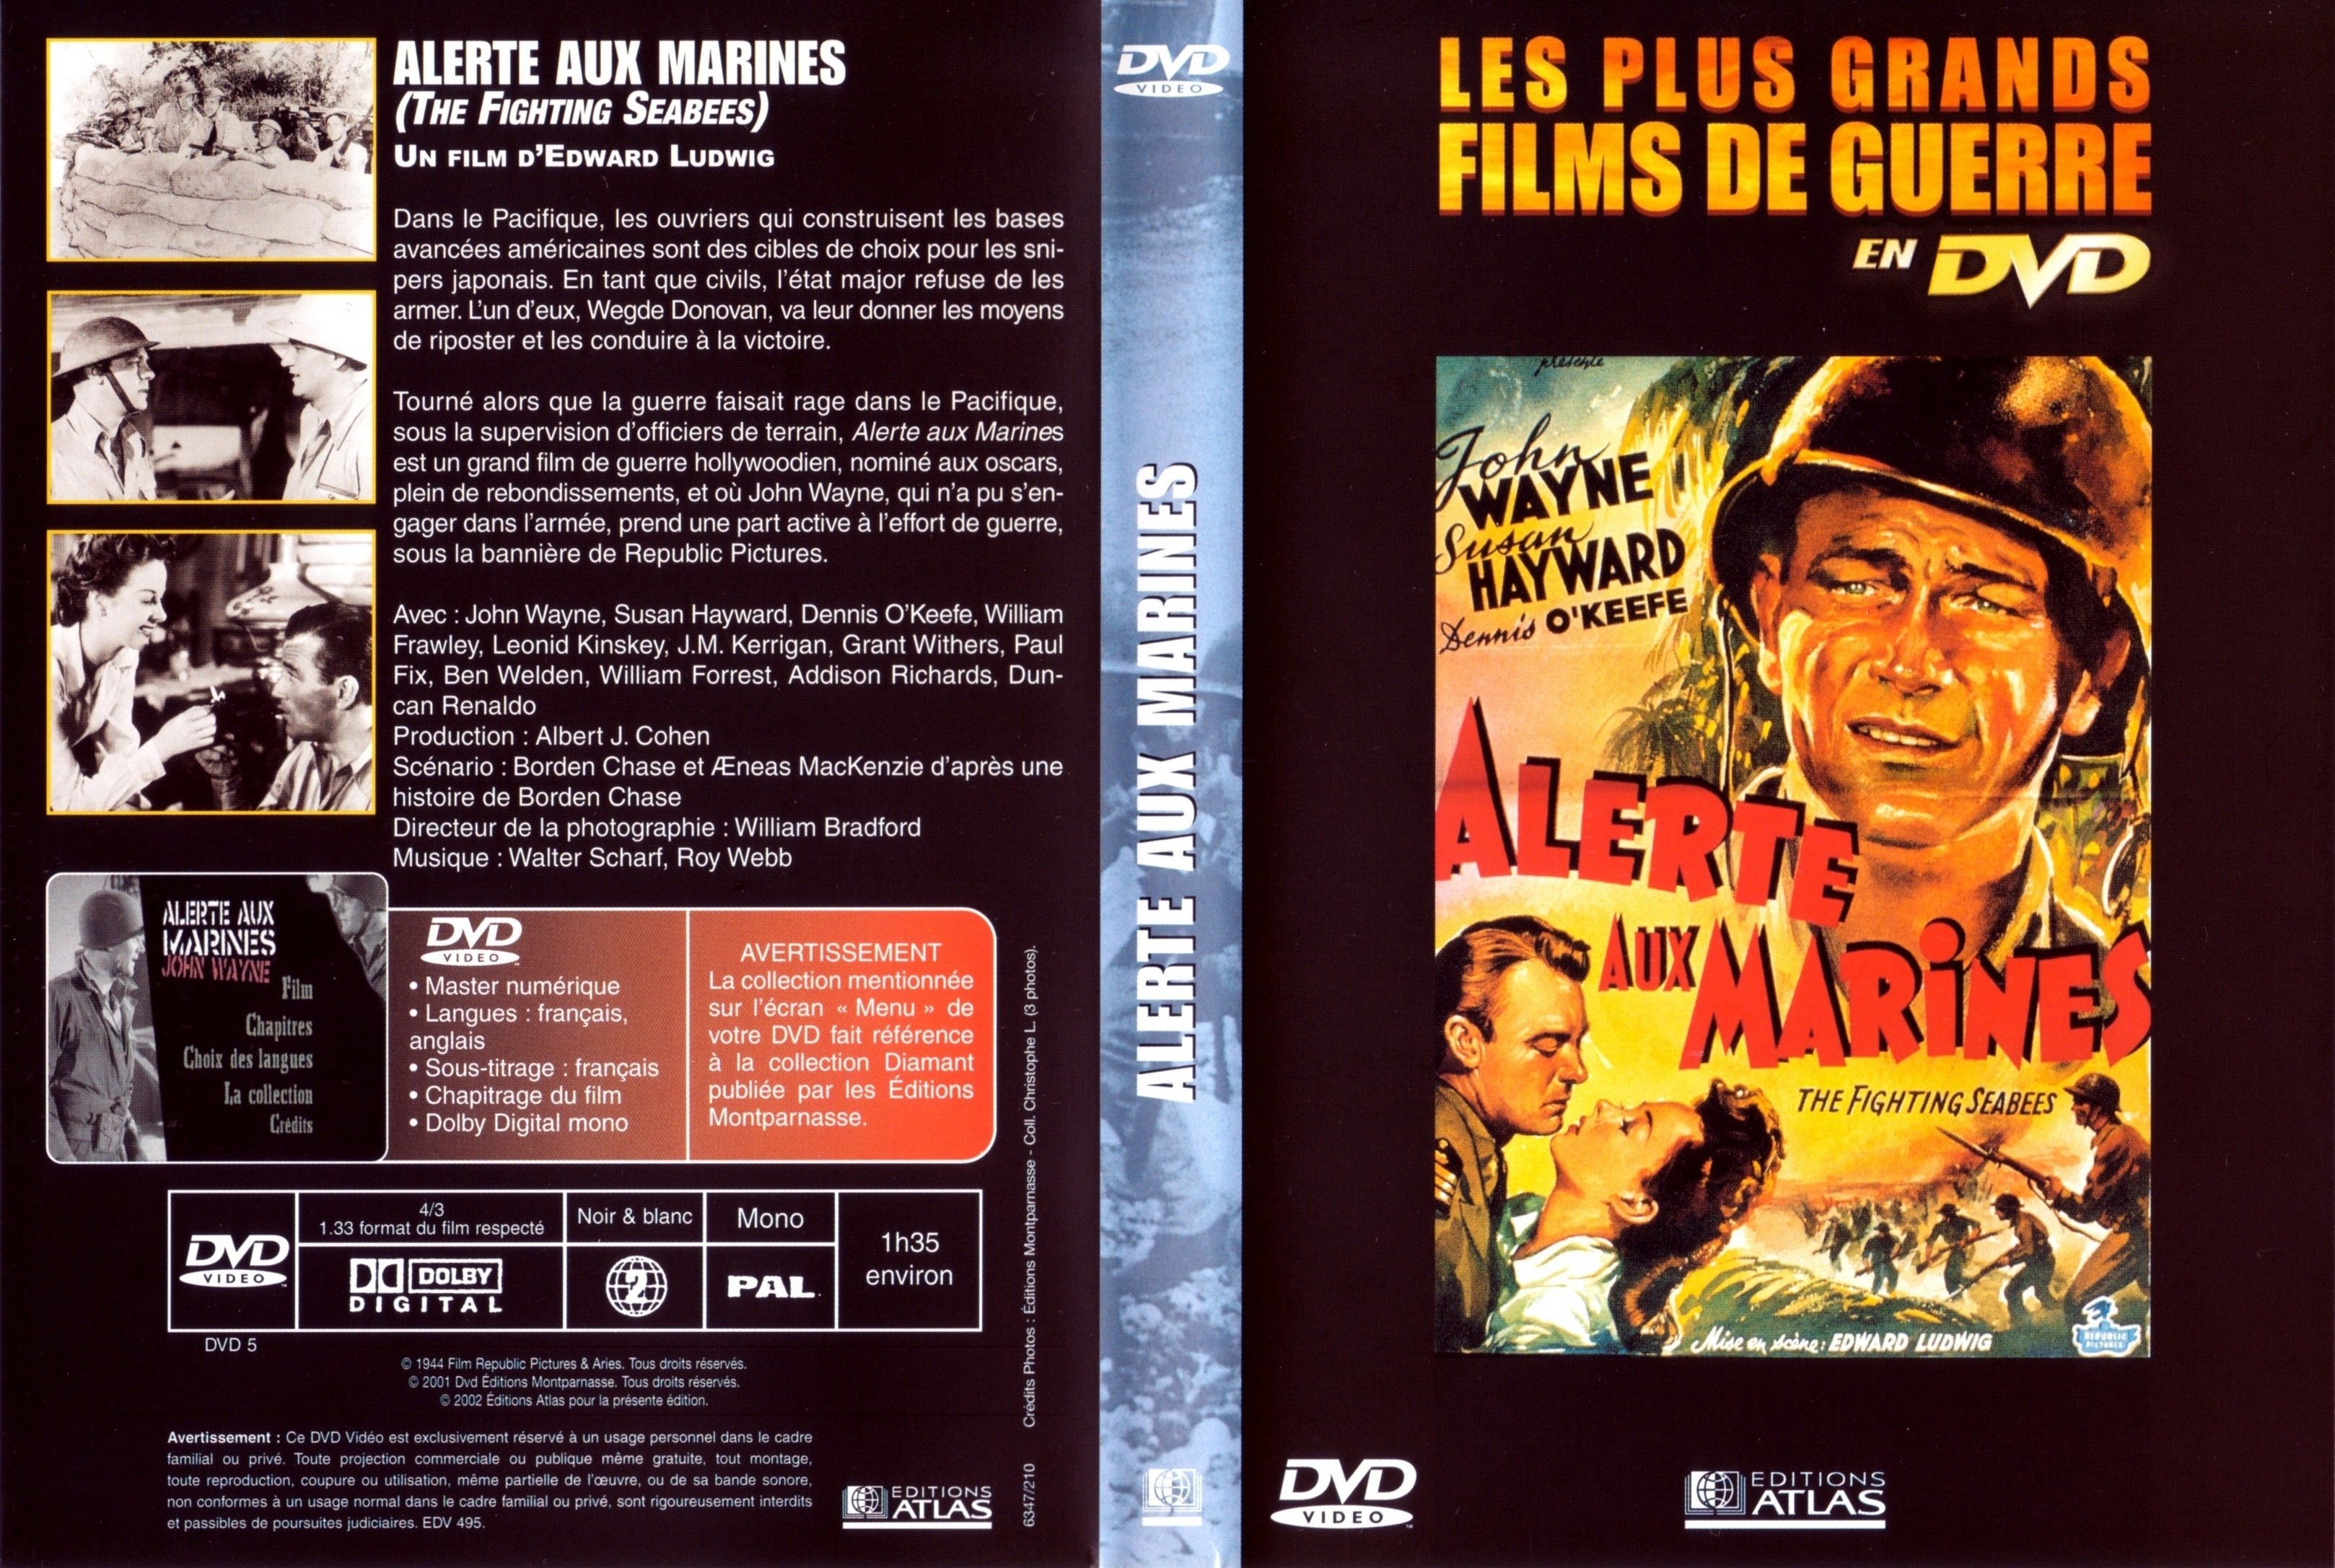 Jaquette DVD Alerte aux marines v2